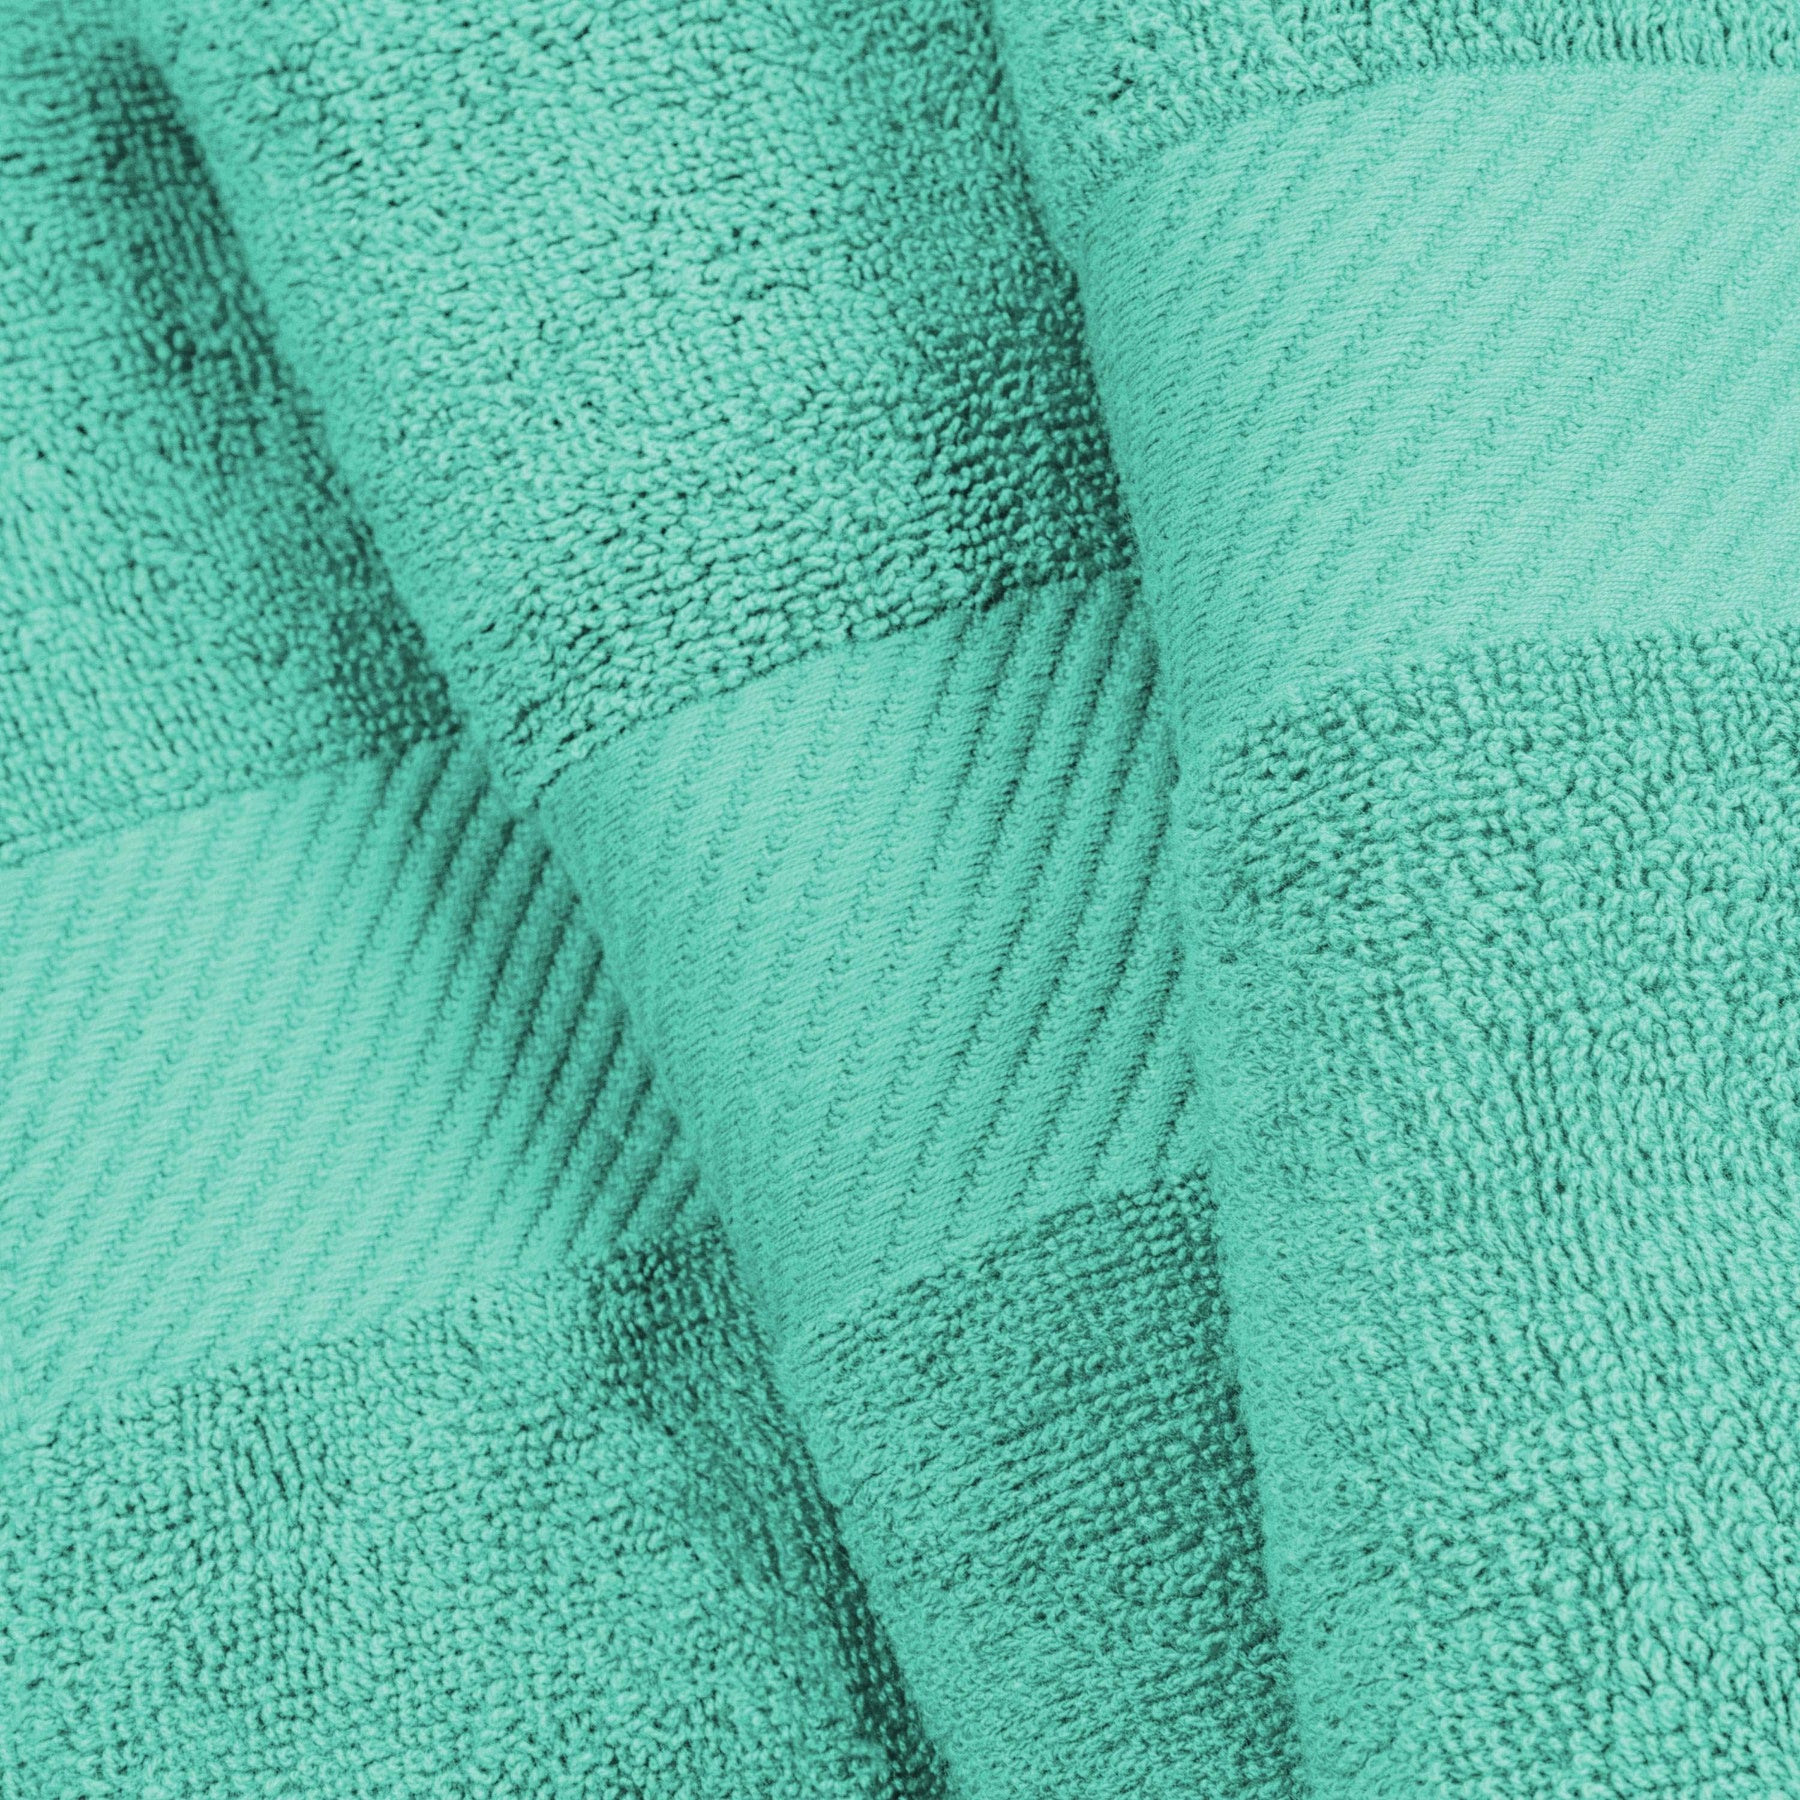 Egyptian Cotton Dobby Border Medium Weight 6 Piece Towel Set - Towel Set by Superior - Superior 